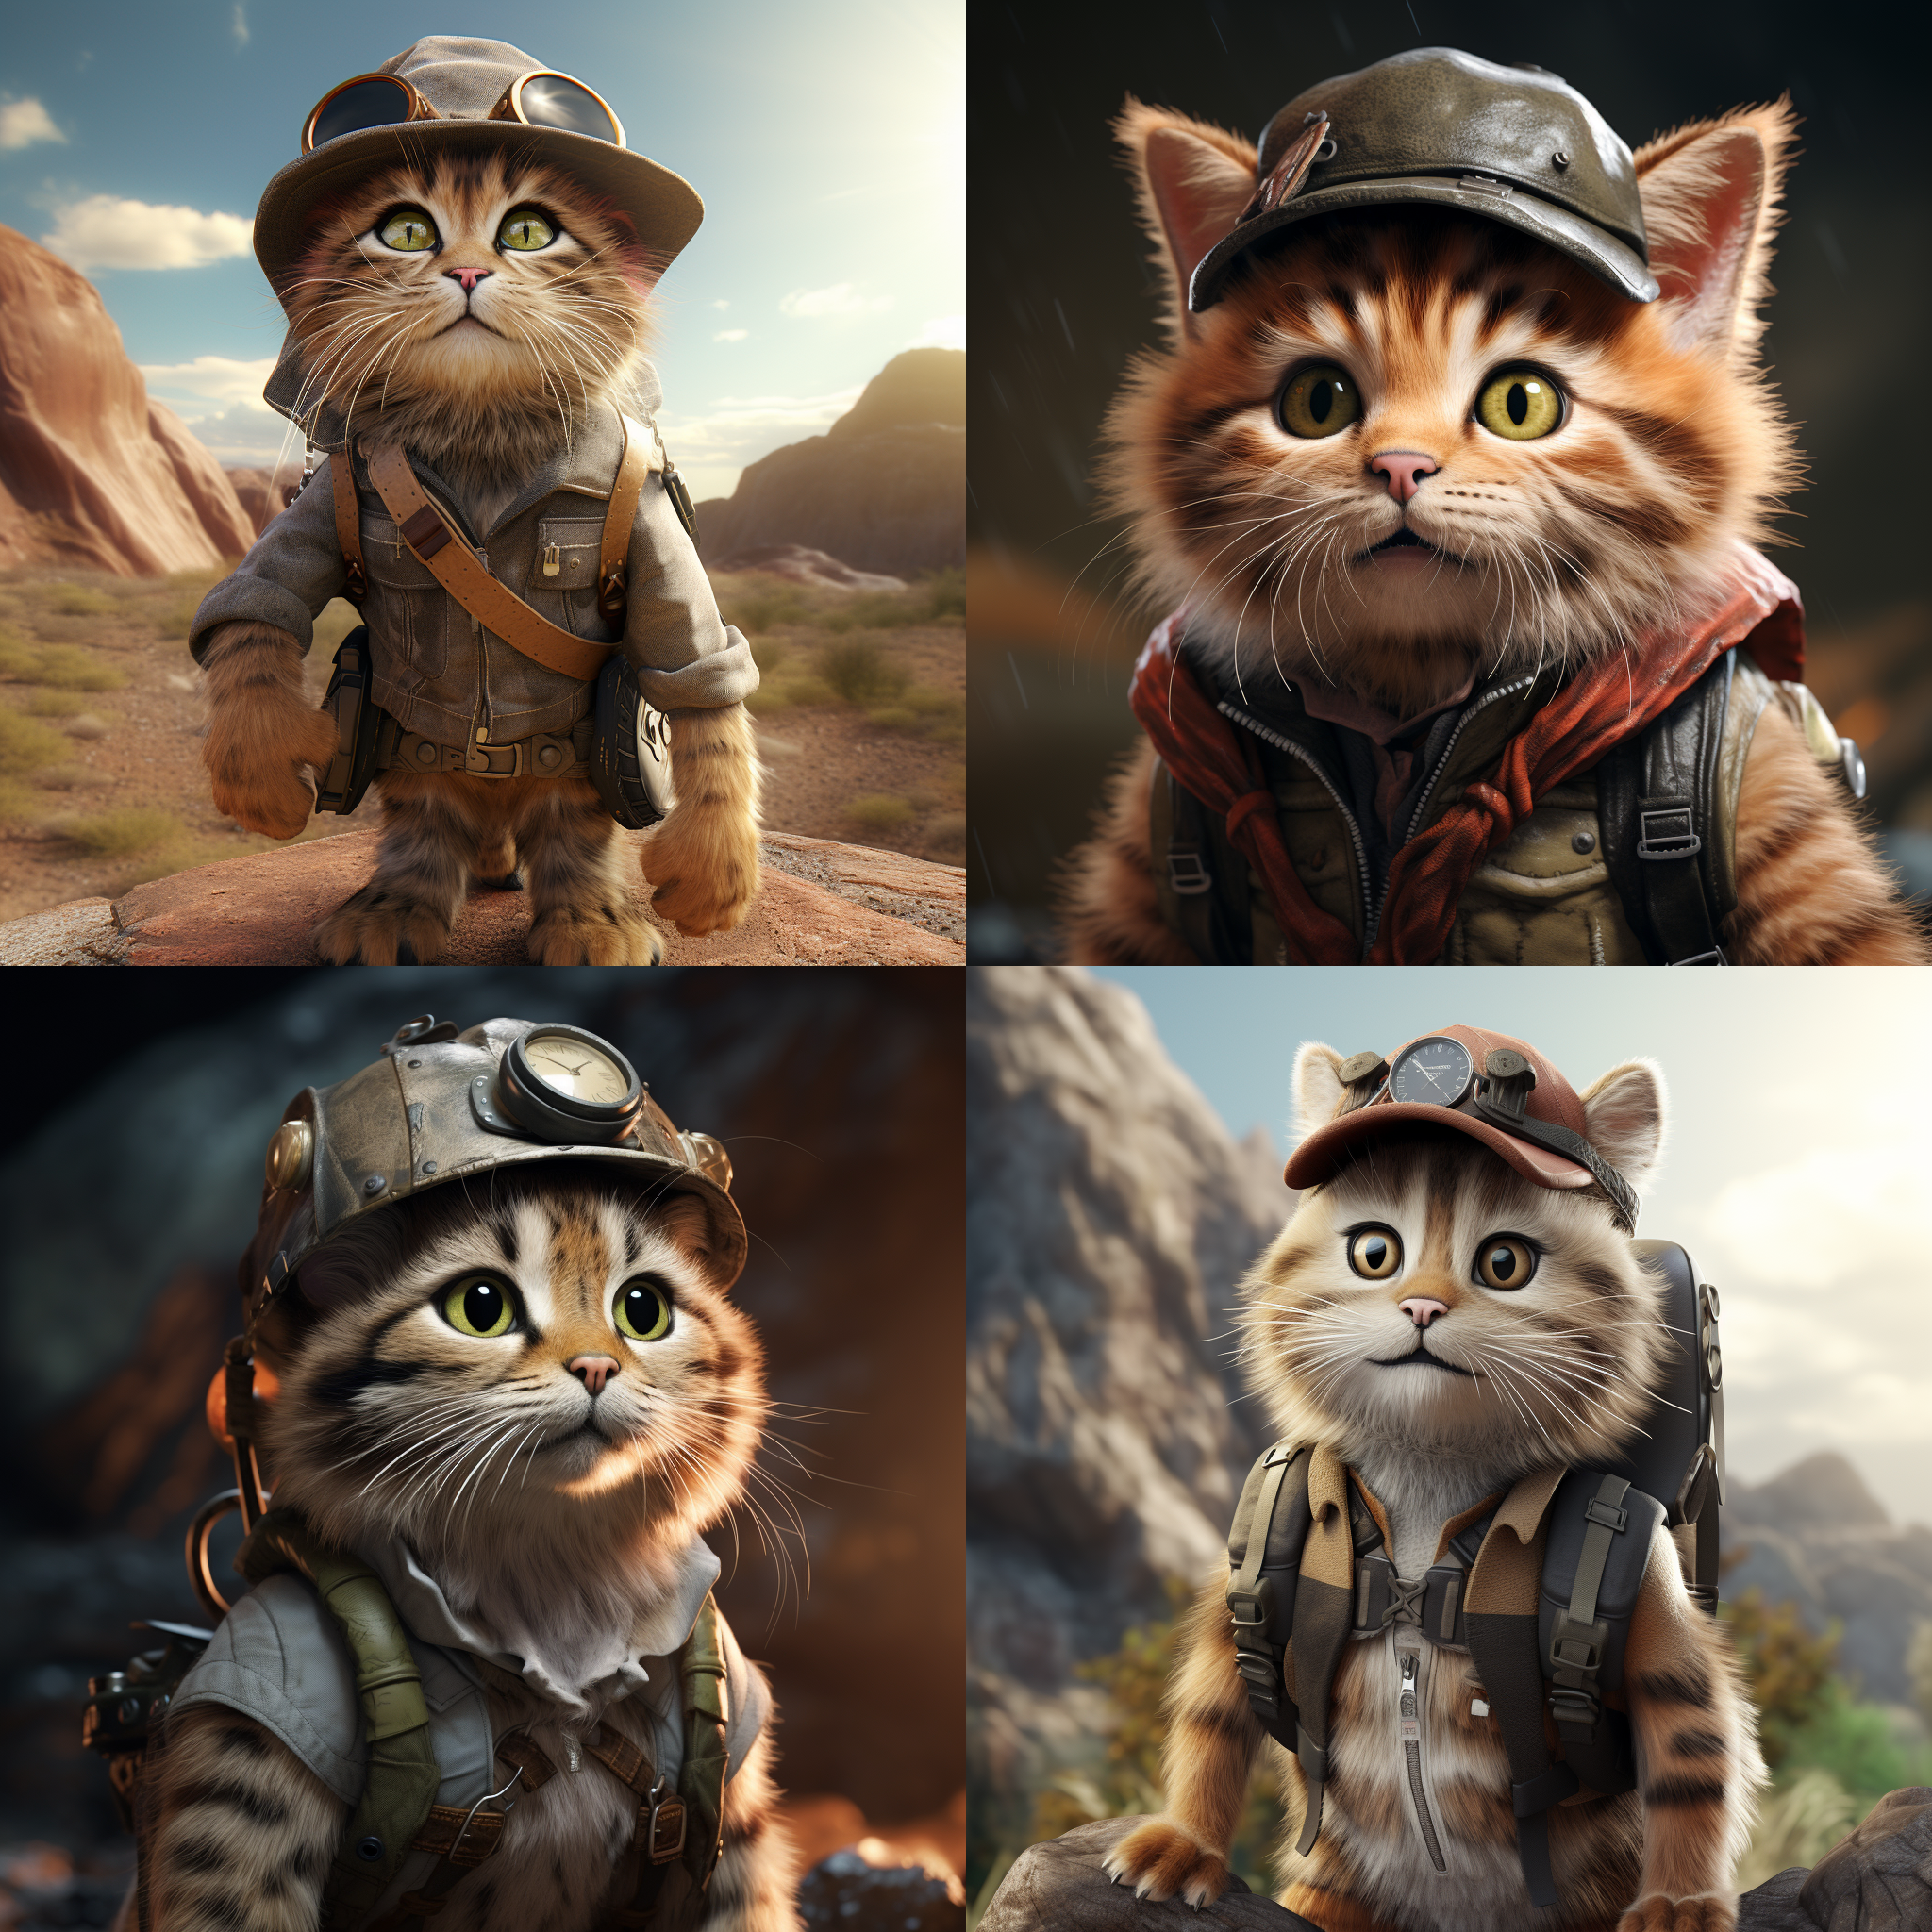 An adventurous anthropomorphic cat wearing a rugged explorer hat